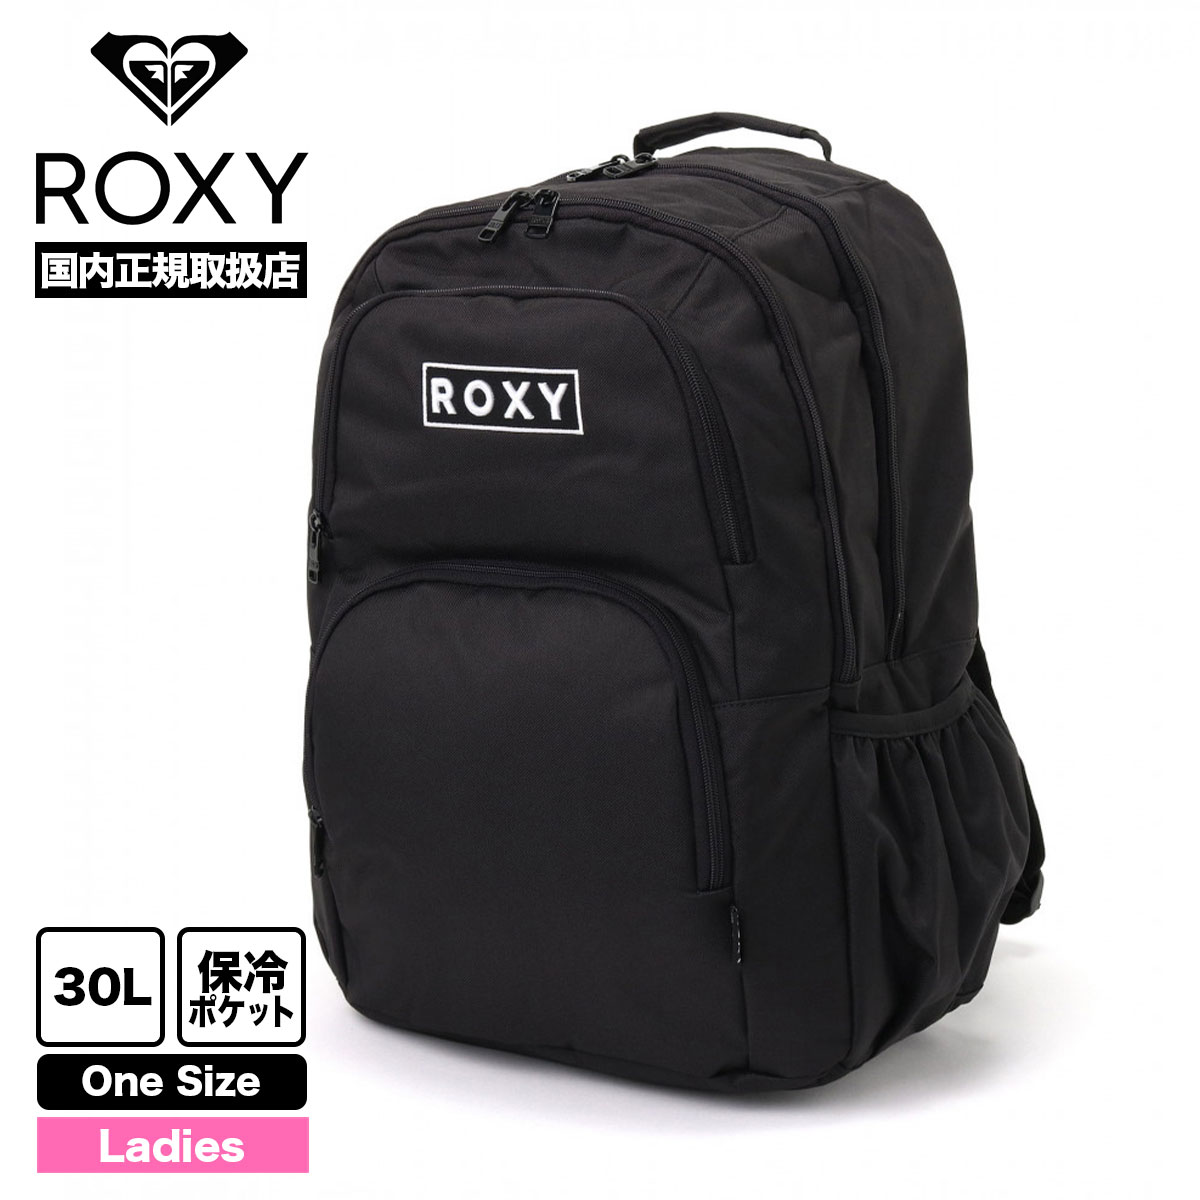 ROXY リュック 30L レディース 通勤 通学 習い事 ロゴ シンプル 全4色 人気 ブランド ...